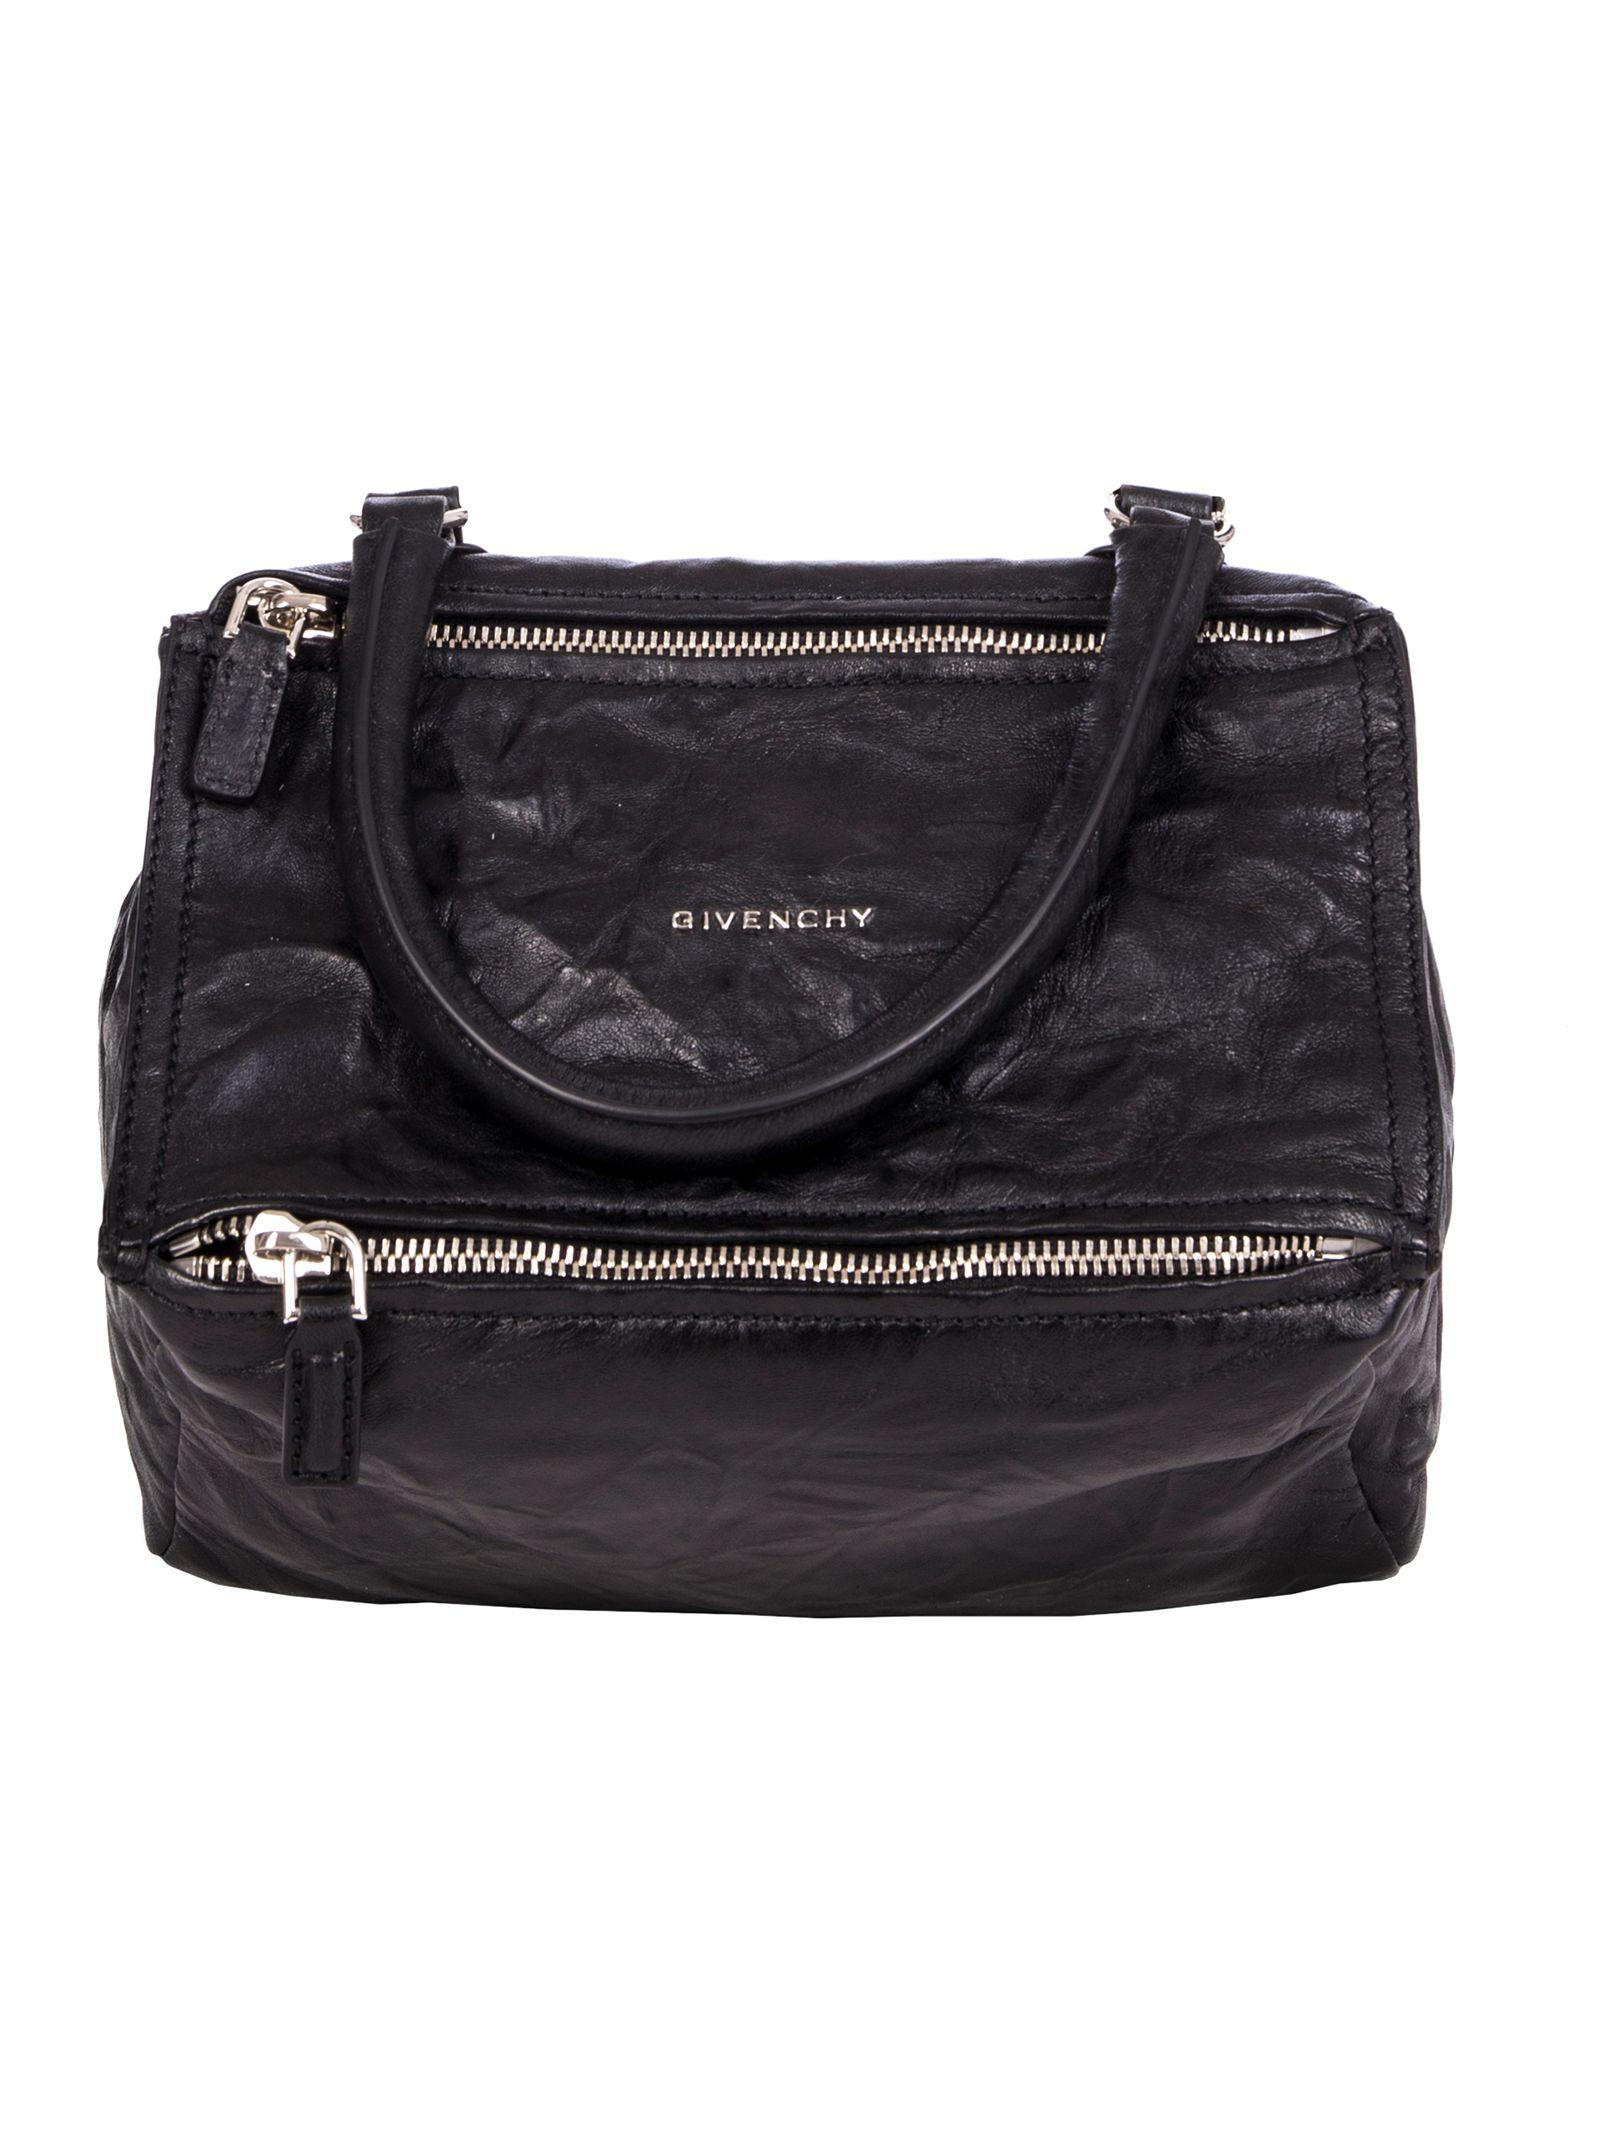 Givenchy Small Pandora Messenger Bag In 